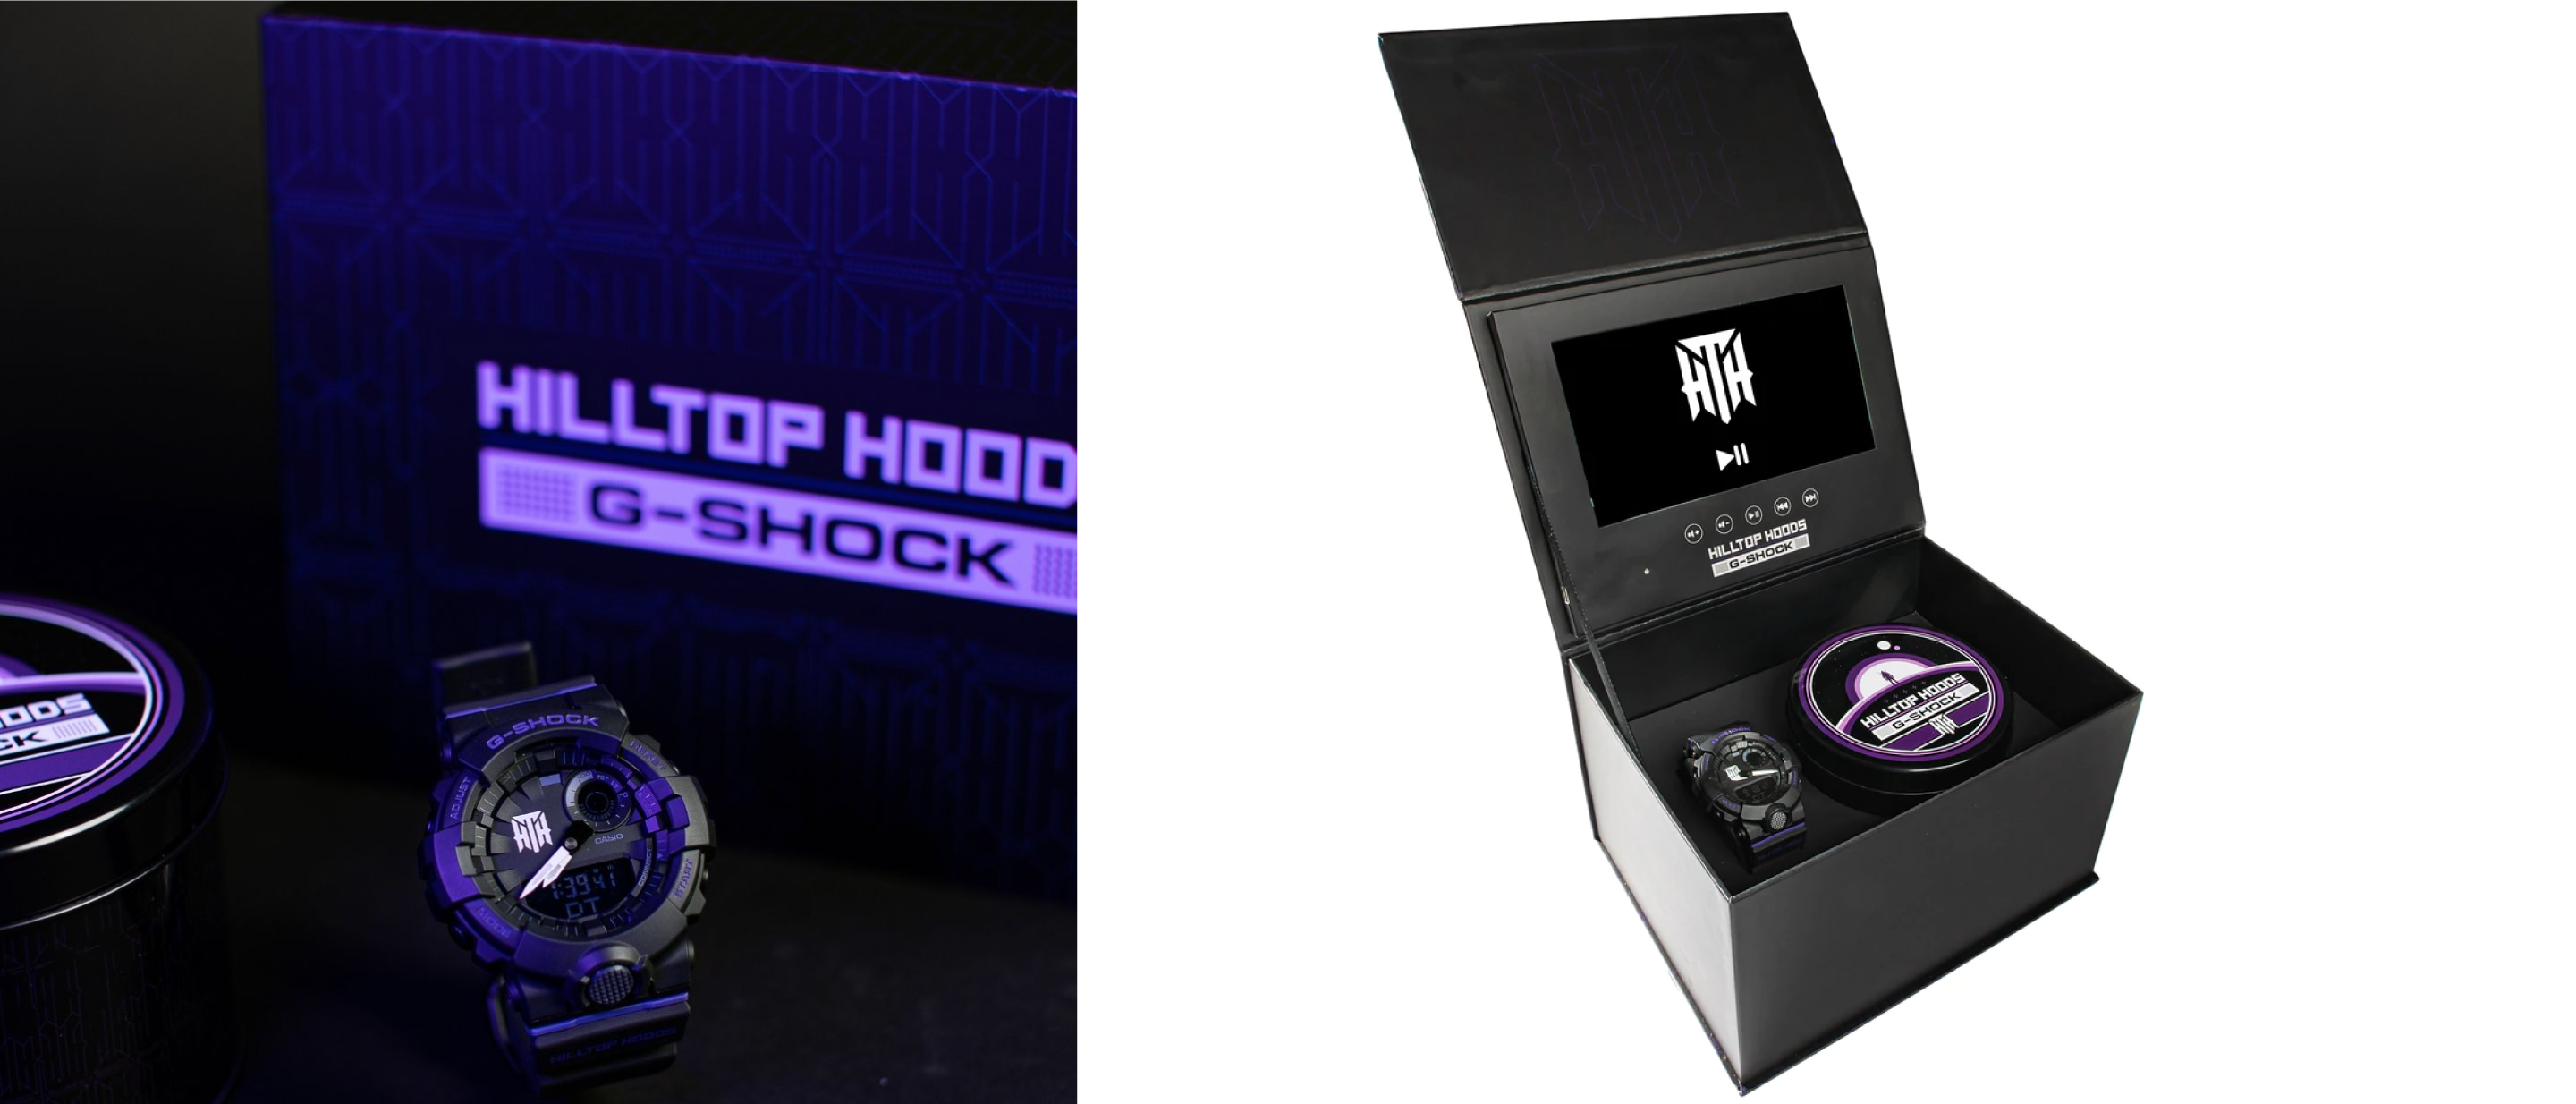 G-Shock x Hilltop Hoods